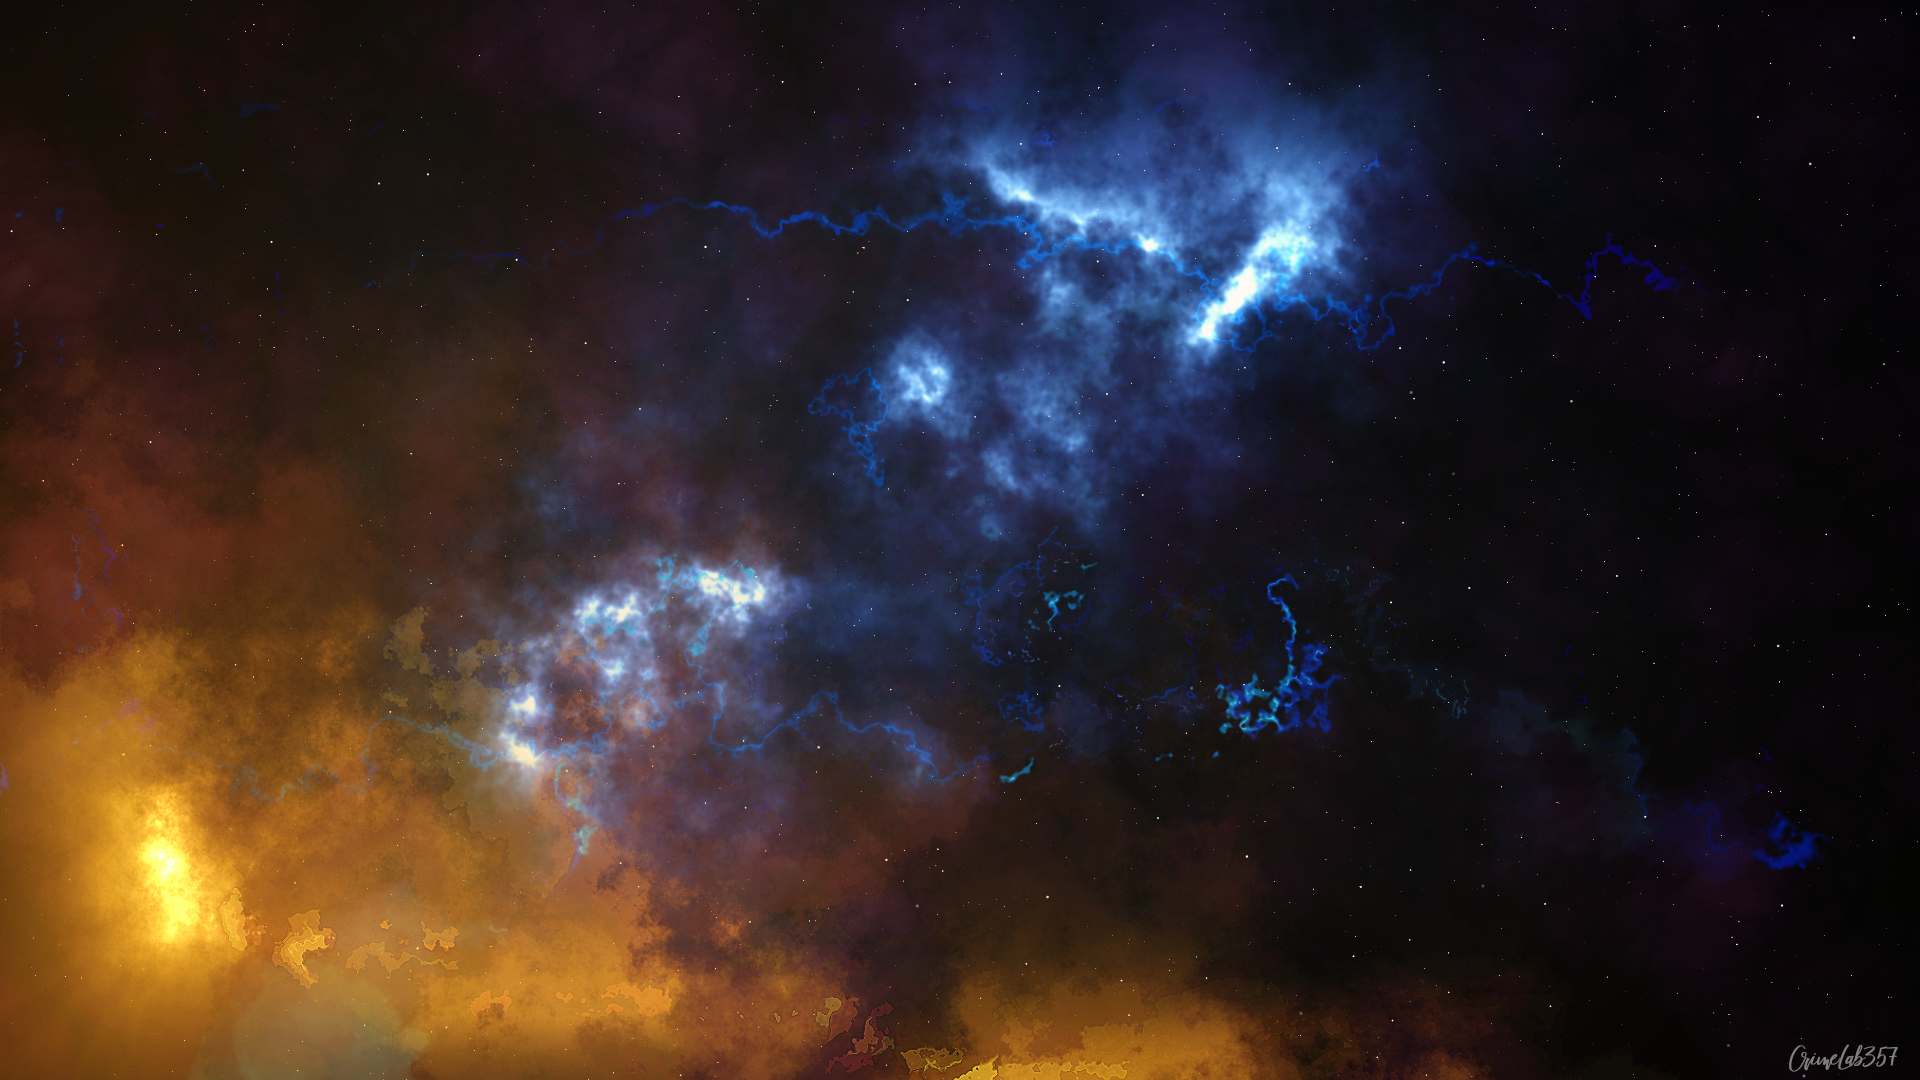 Nebula Deep Space Hubble Space Telescope Watermarked Stars 1920x1080